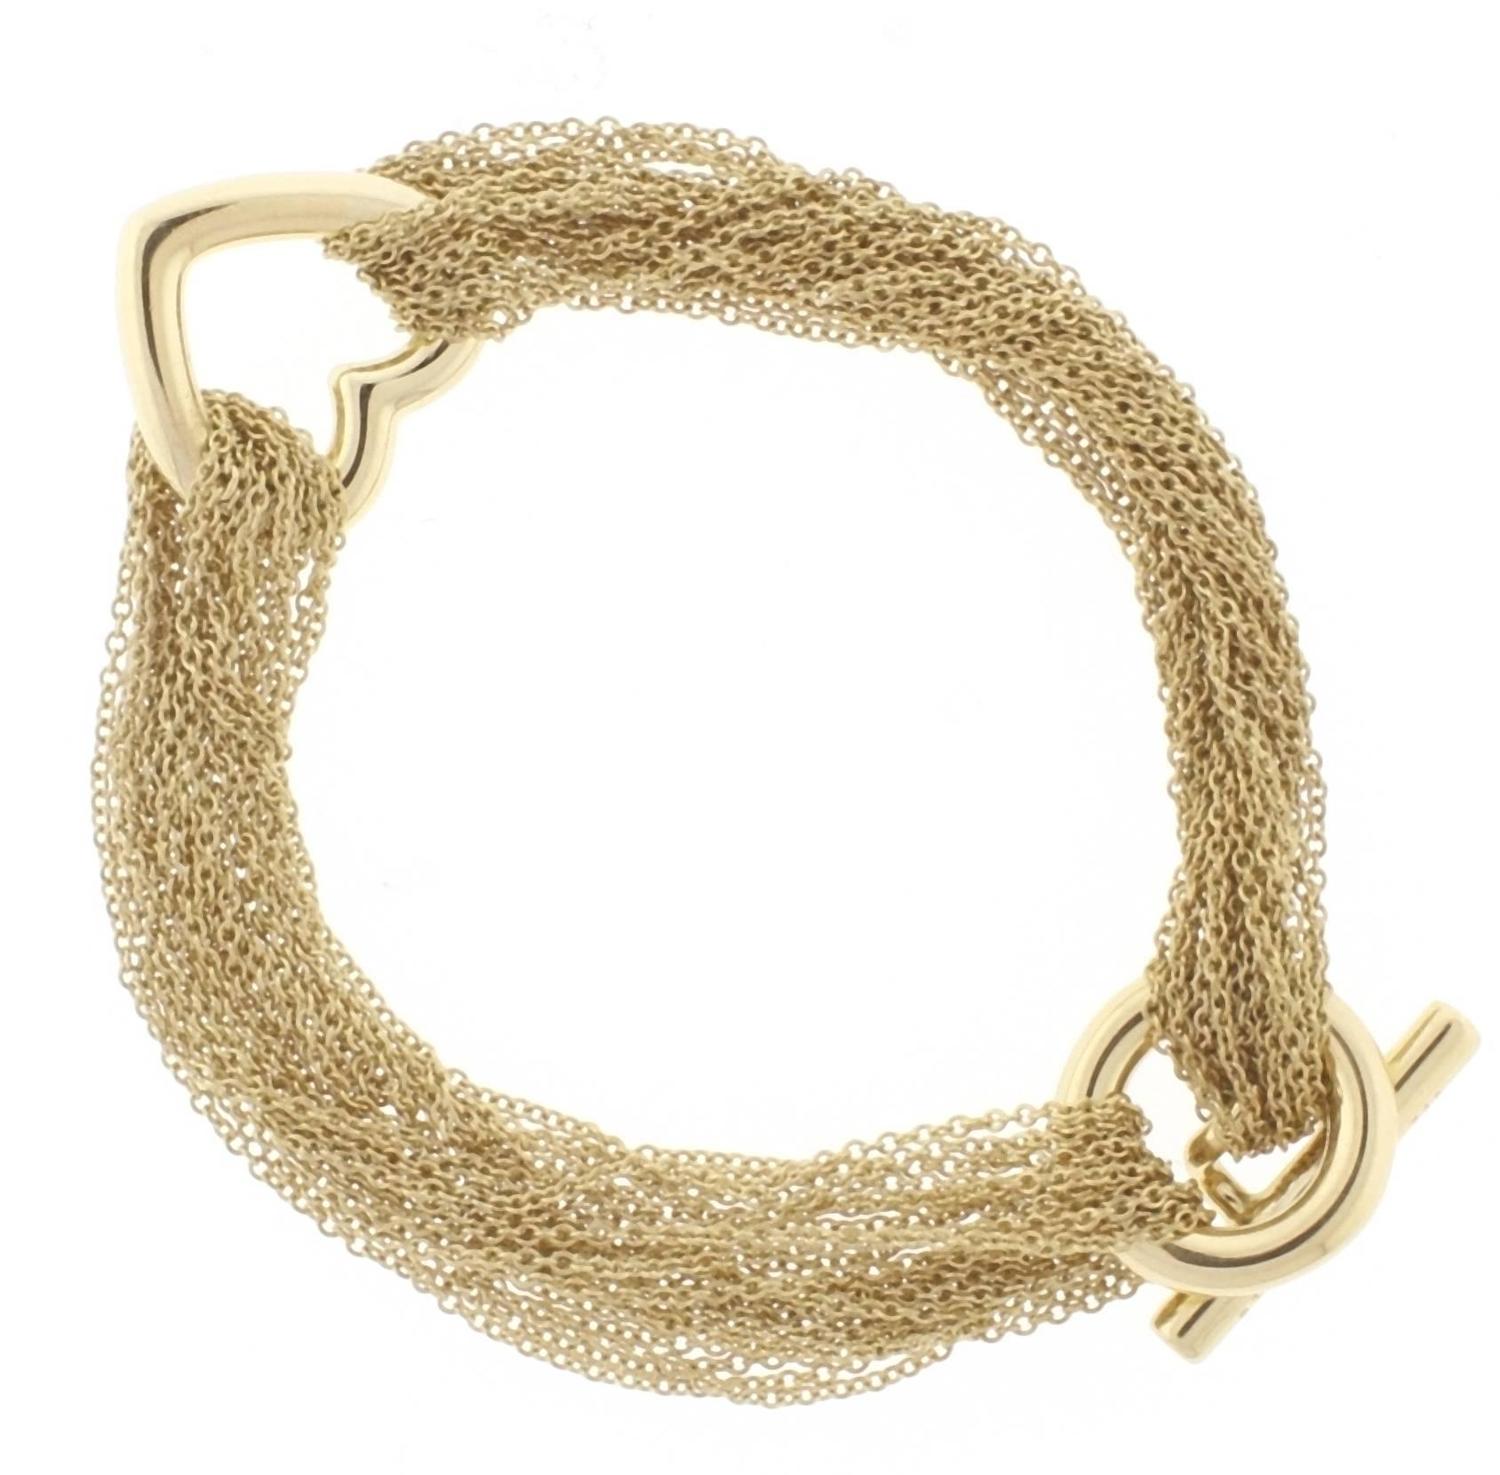 tiffany multi strand heart bracelet